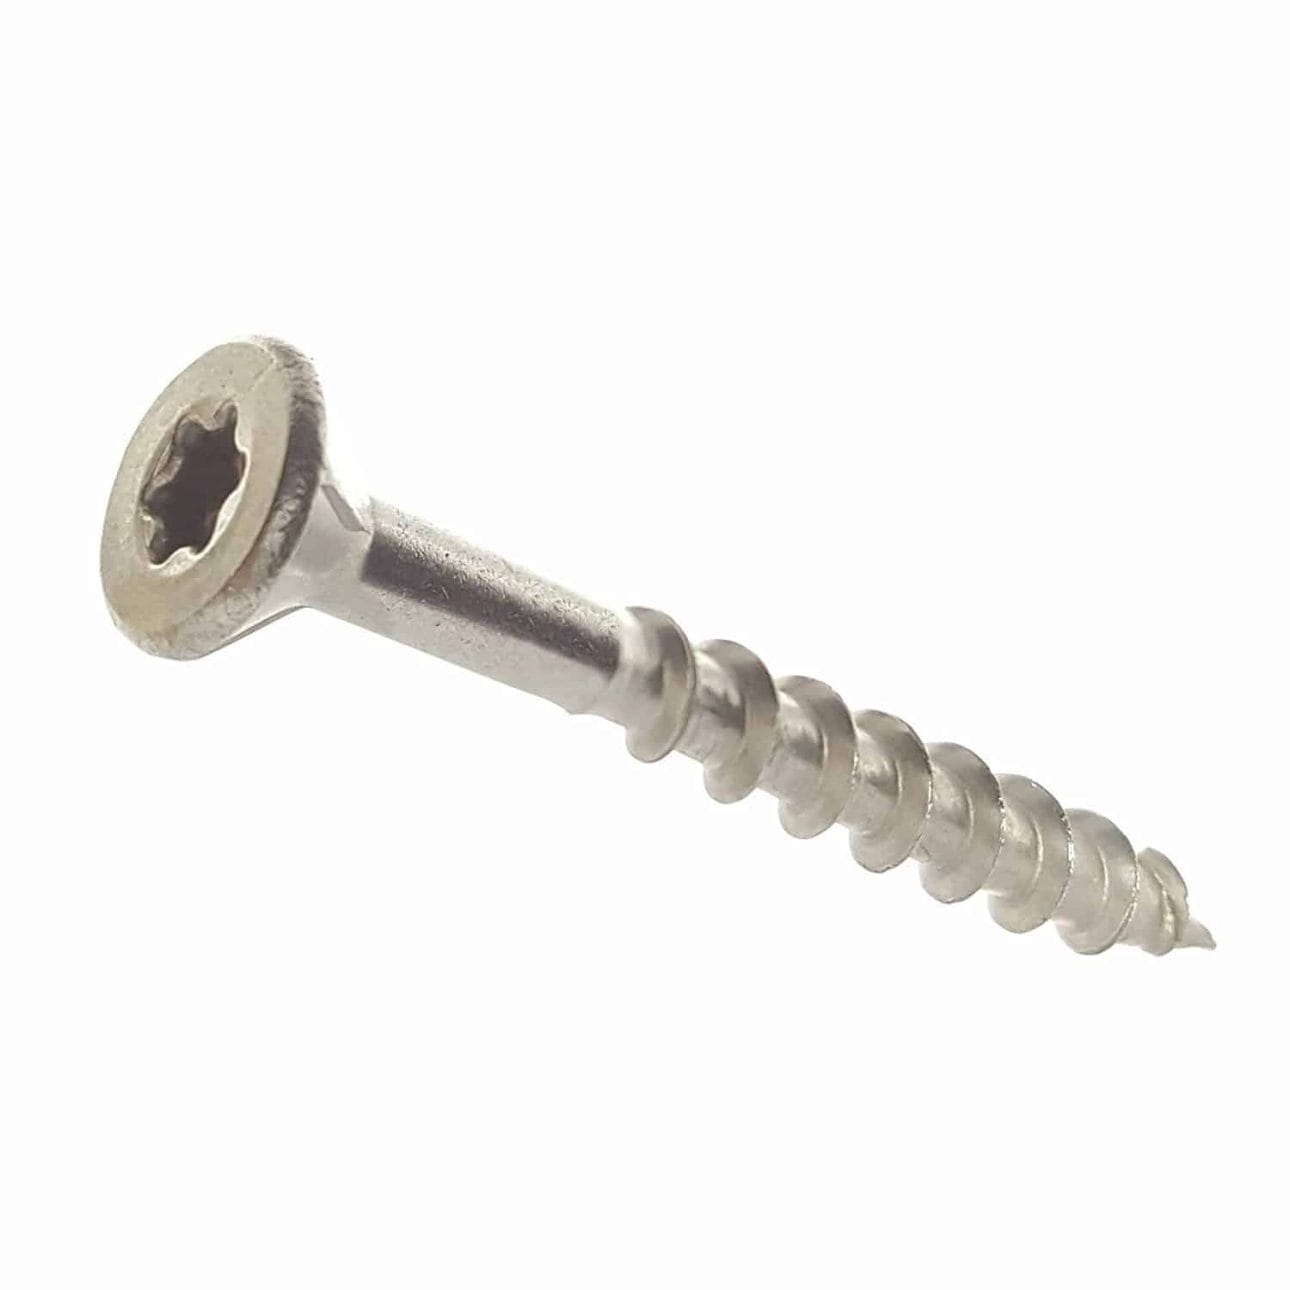 Type of screws